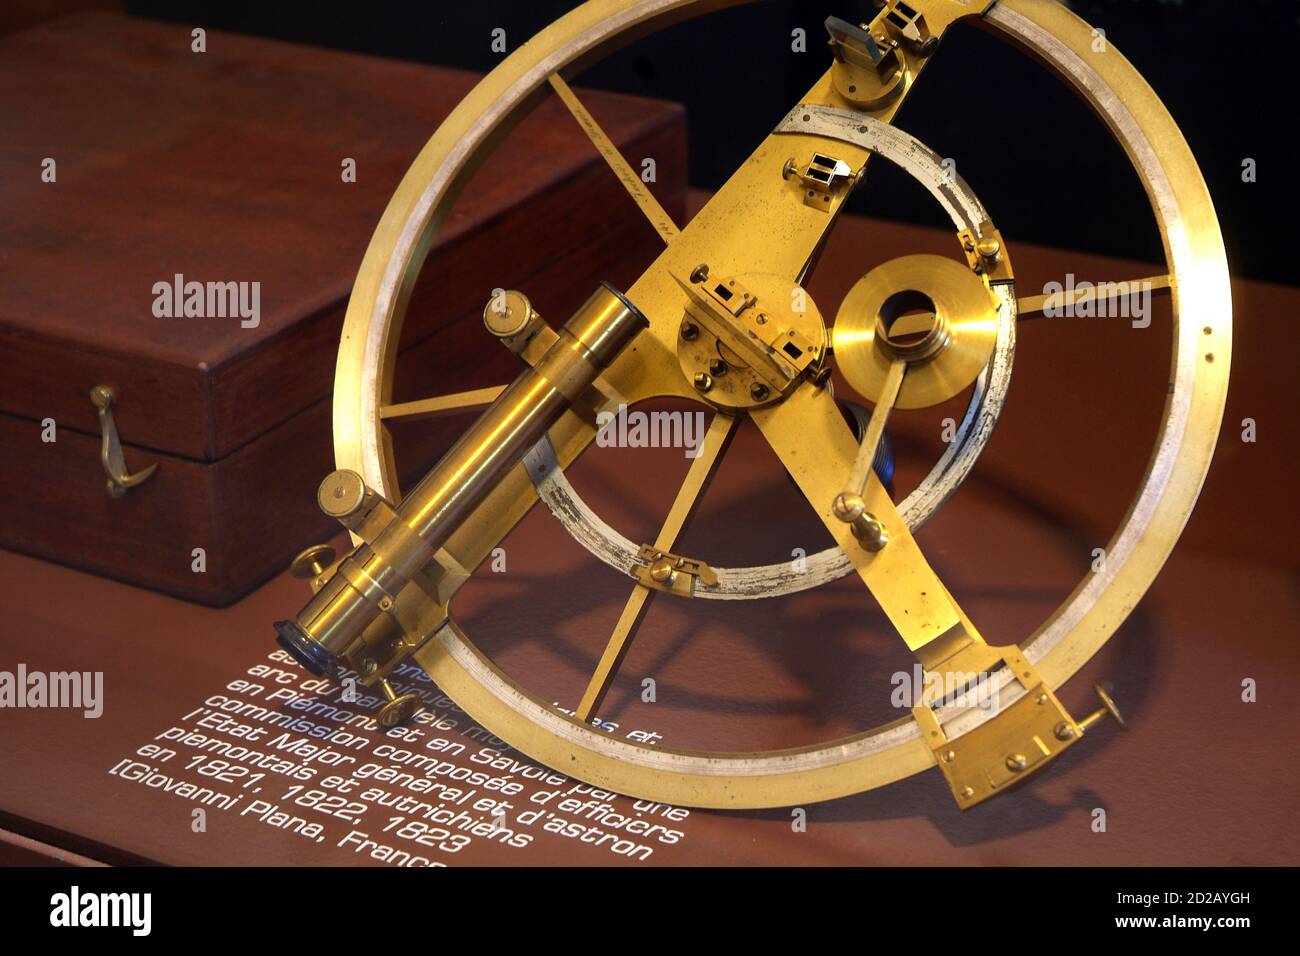 old astronomy equipment